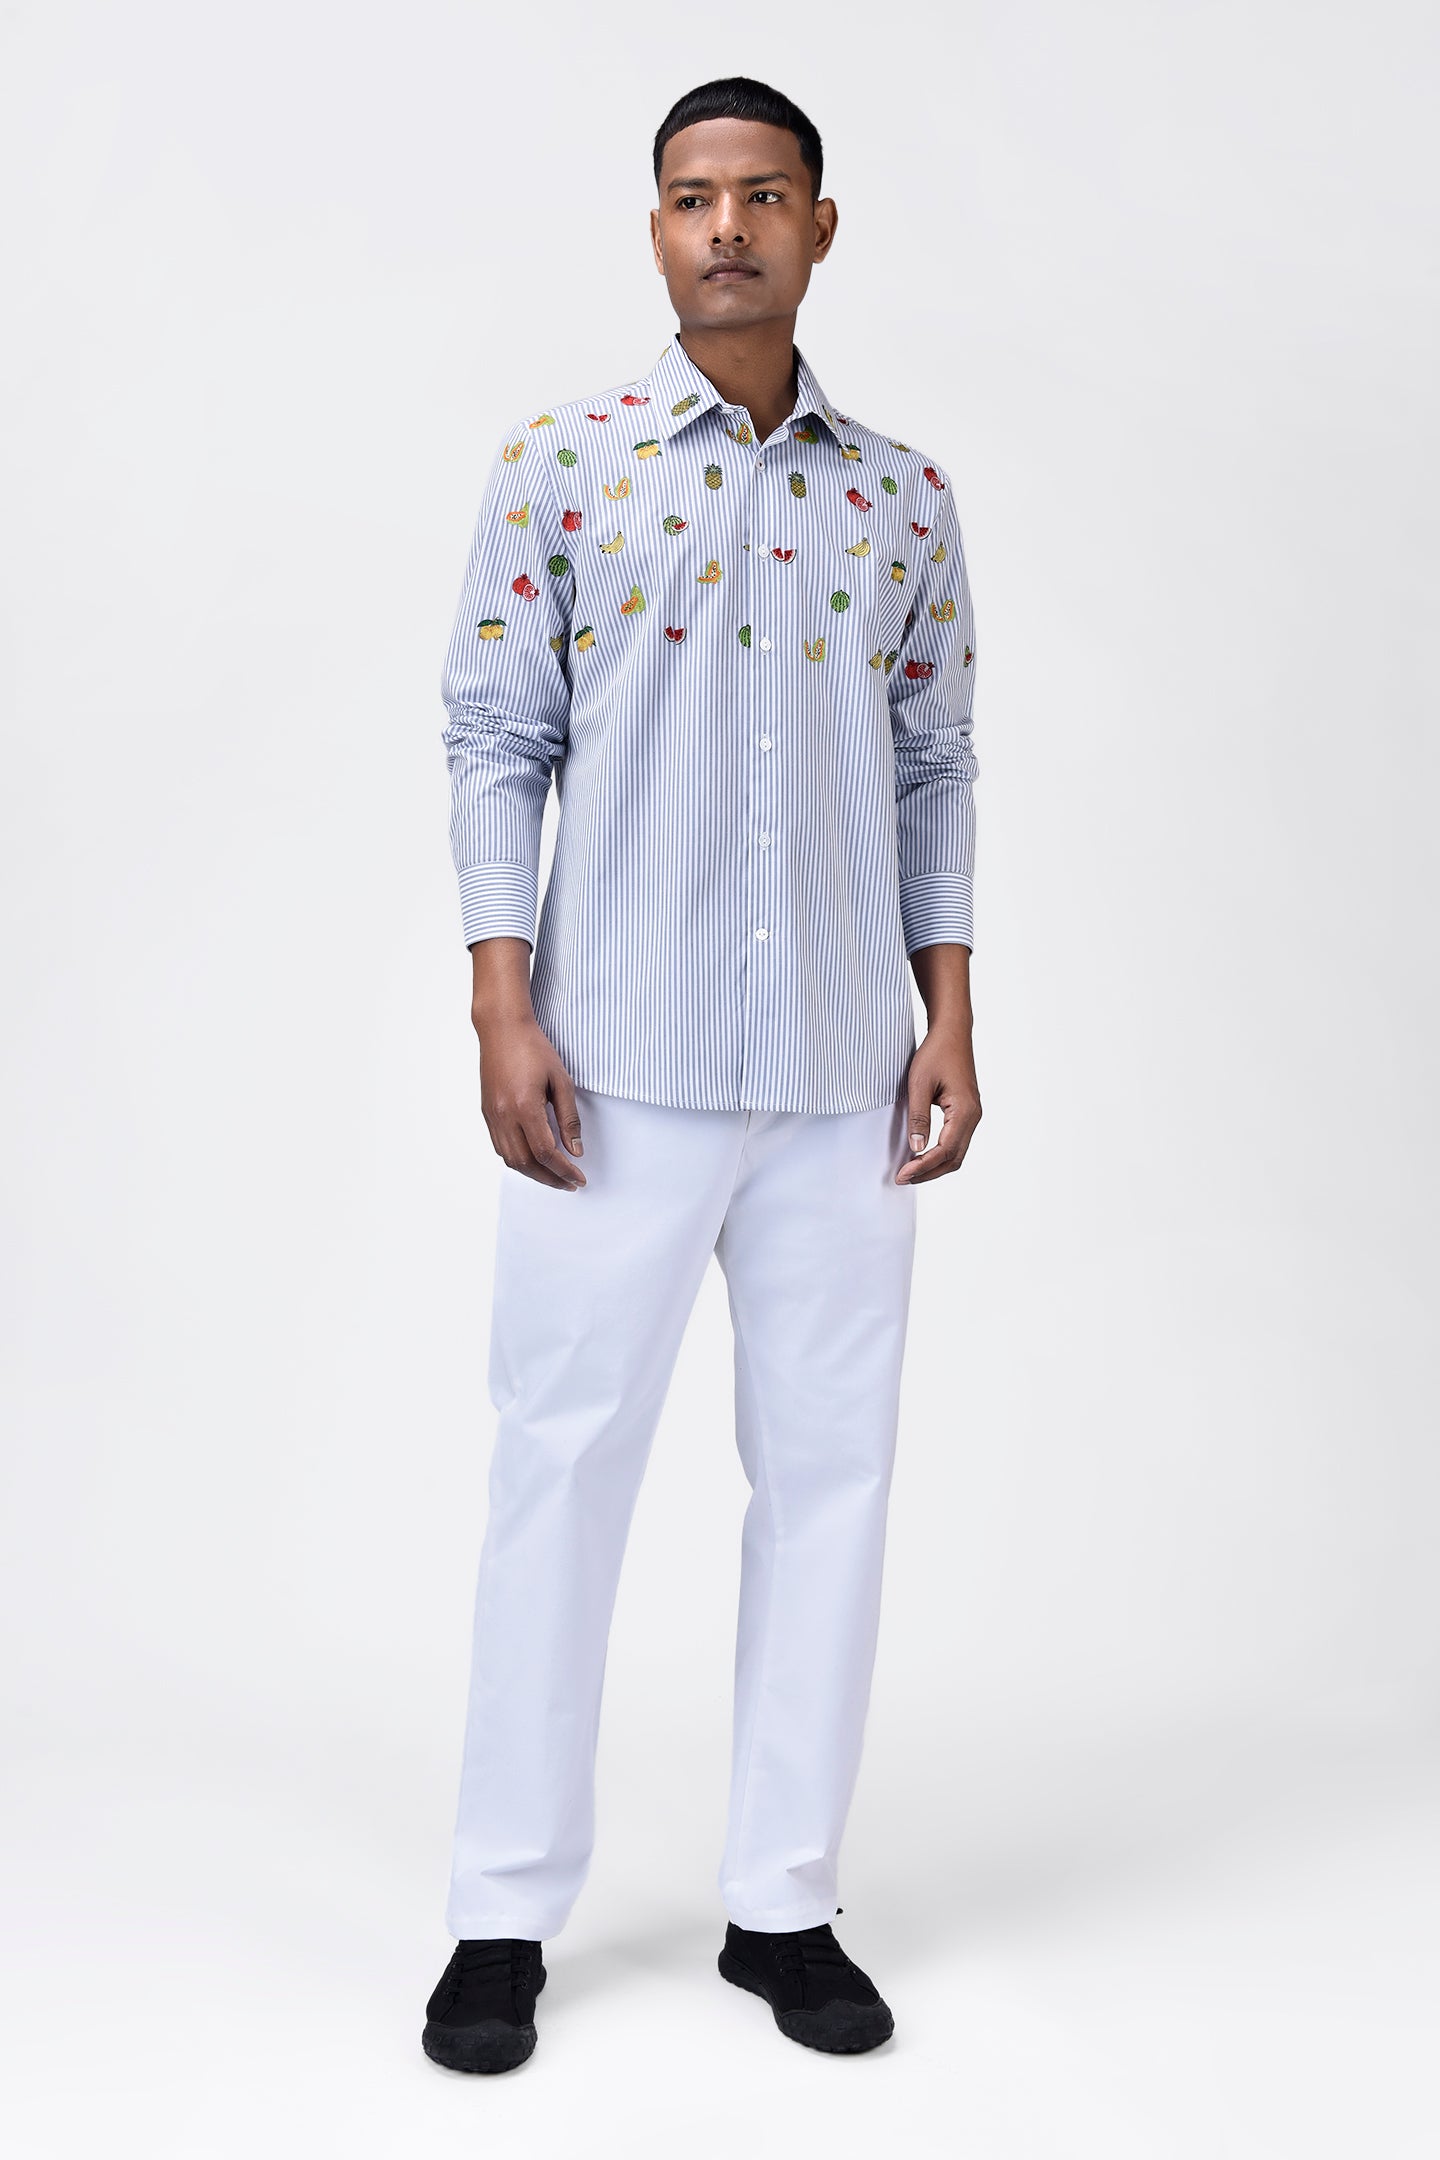 Fruit Motifs Embroidered Striped Men's Button-Down Shirt